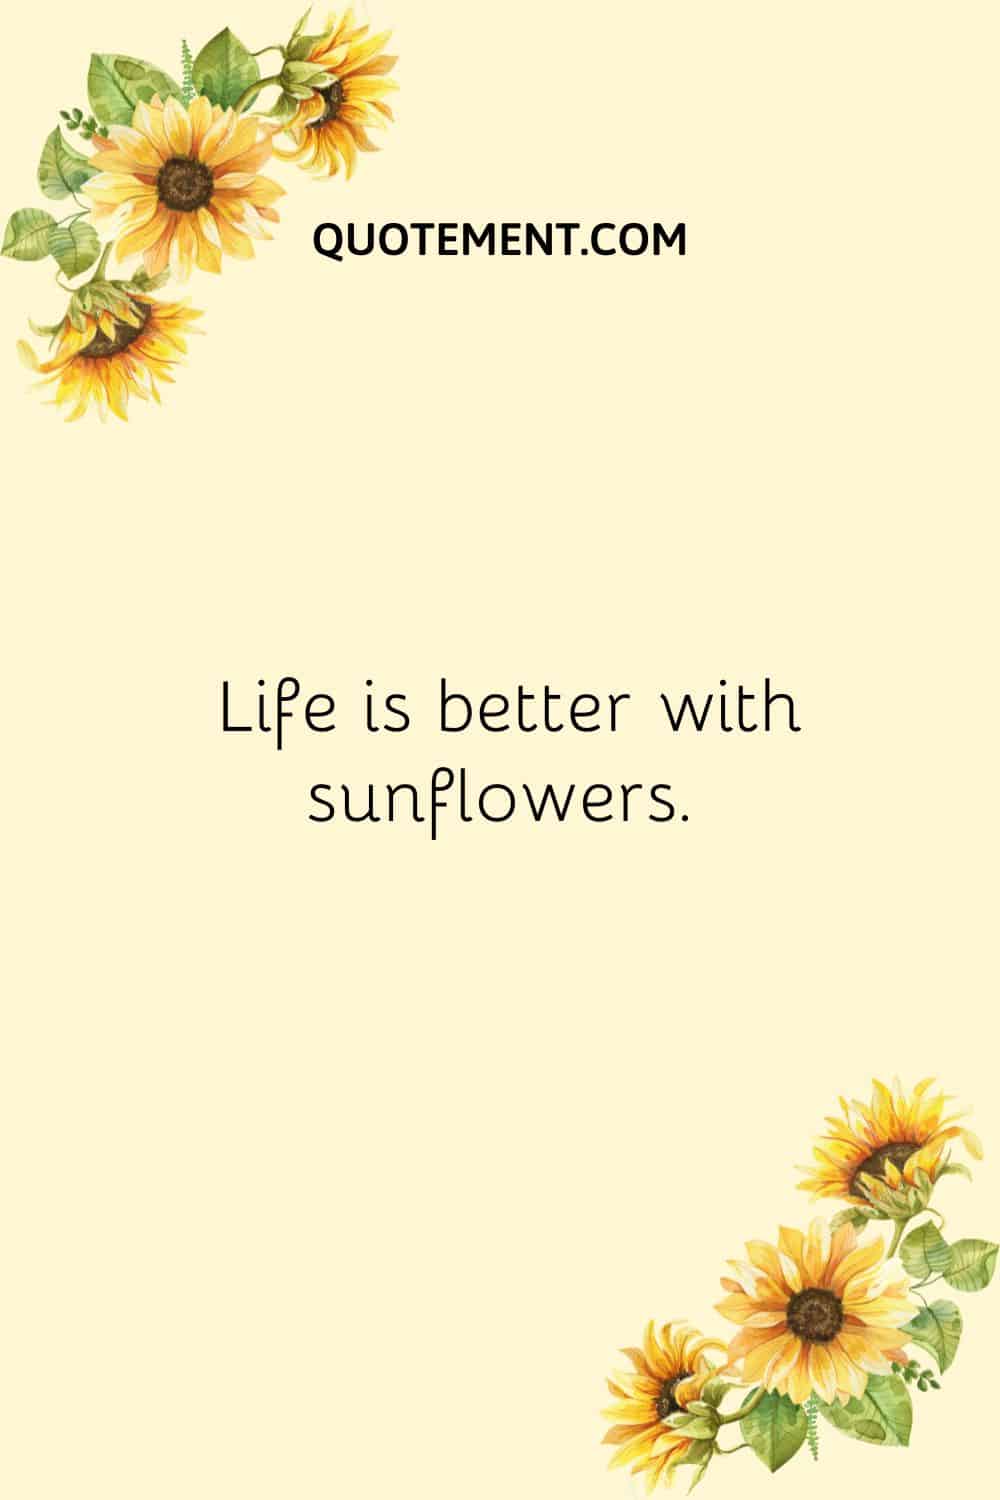 Sunflower caption and a cute sunflower illustration.